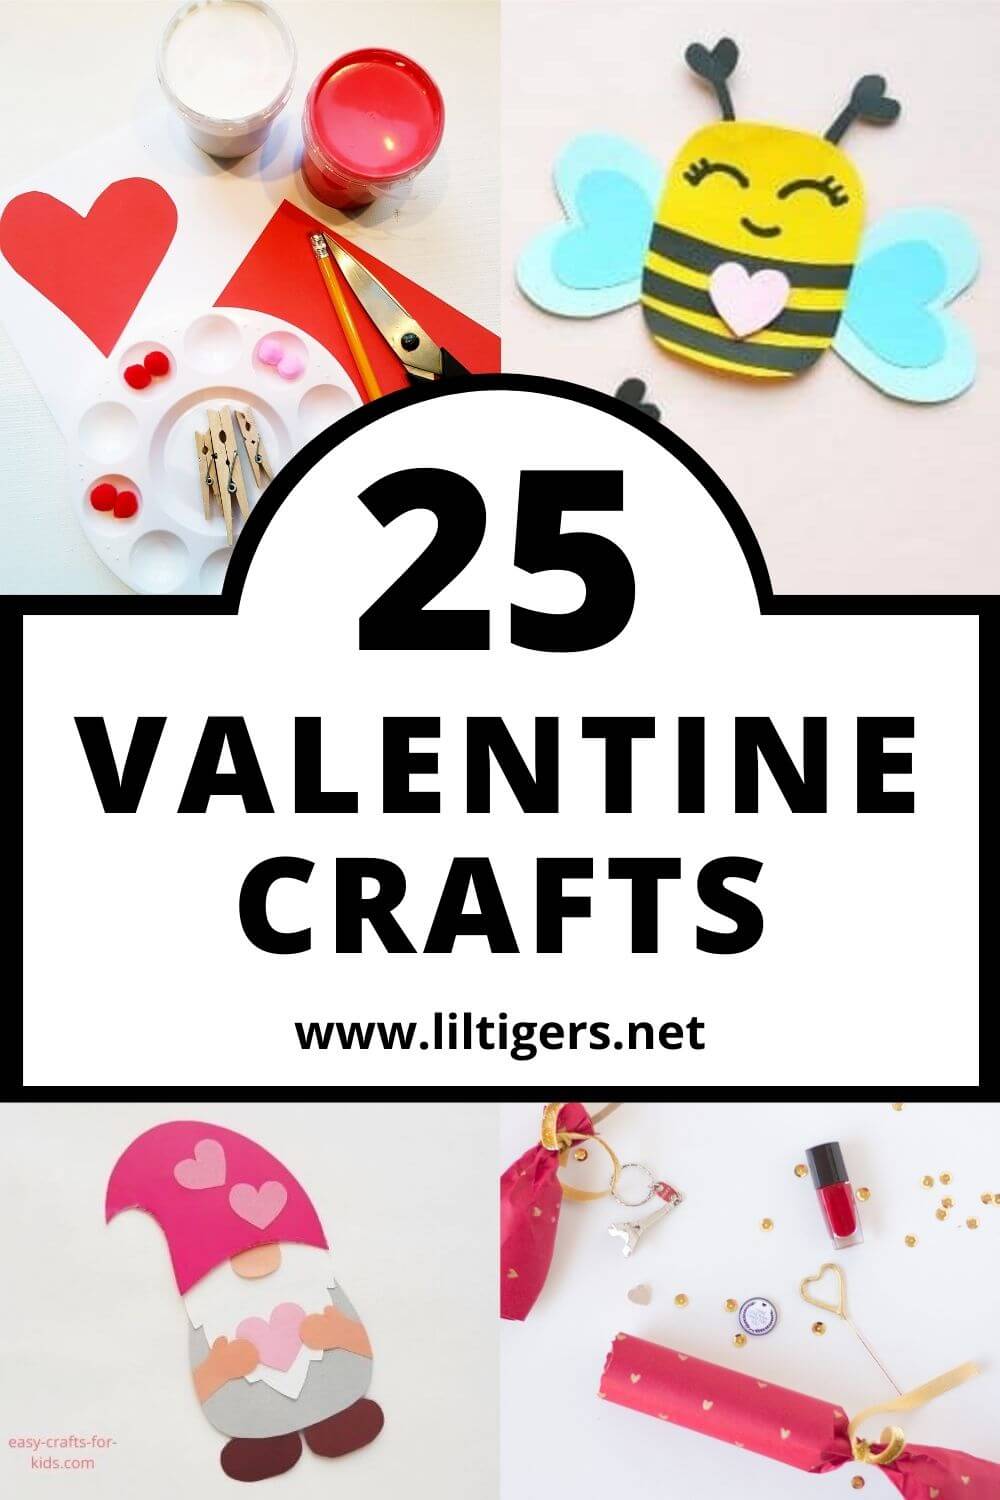 Valentine's day crafts for kids